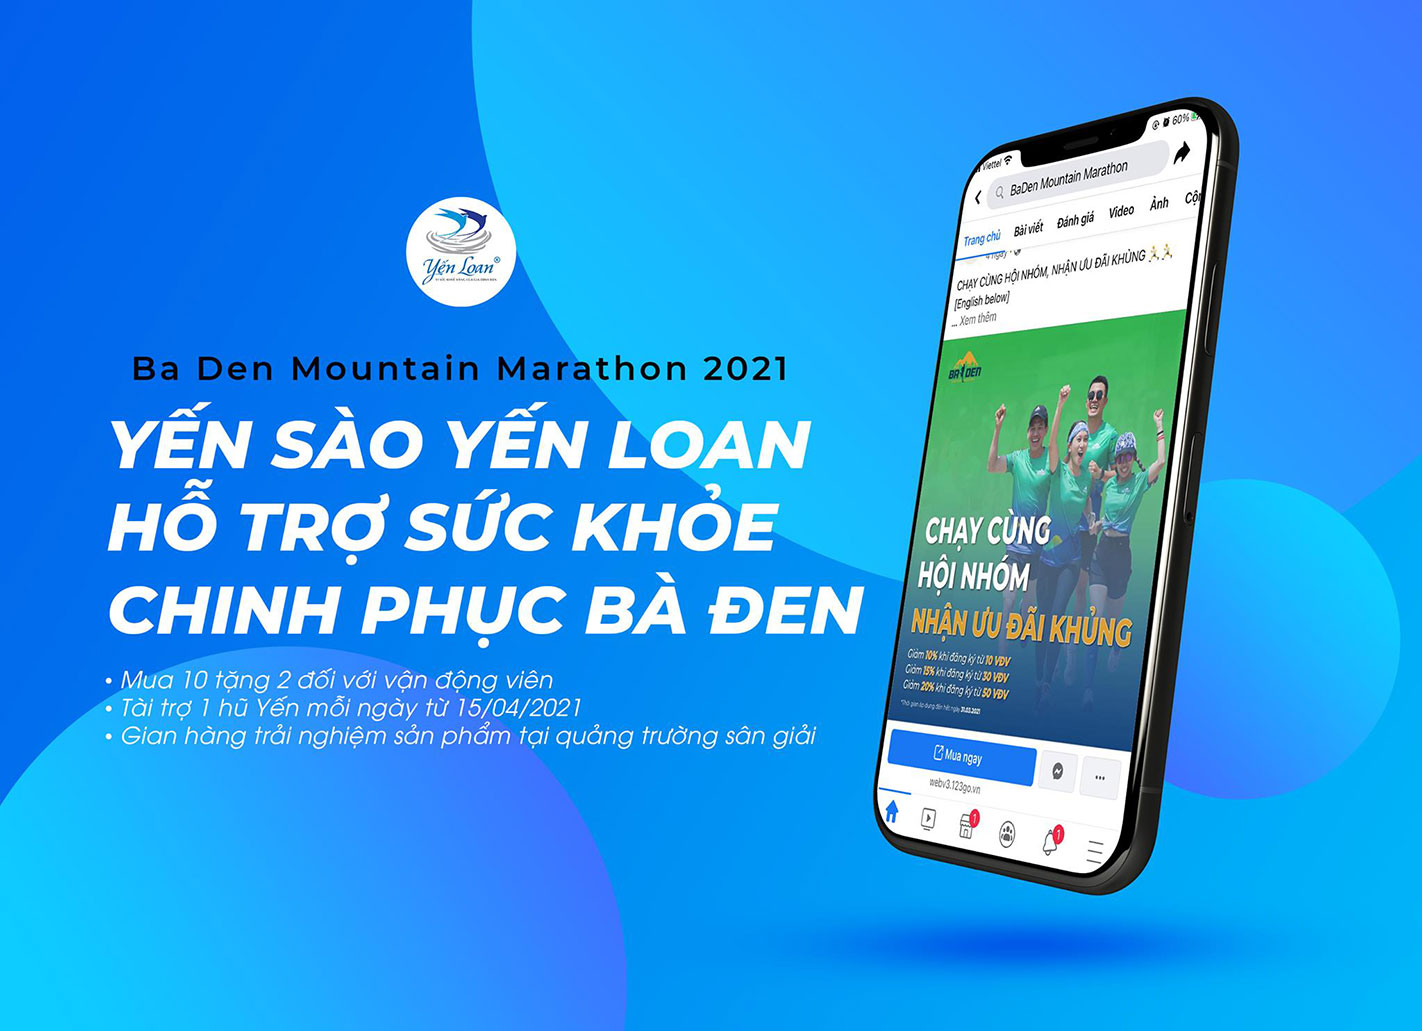 Baden mountain marathon Tây Ninh